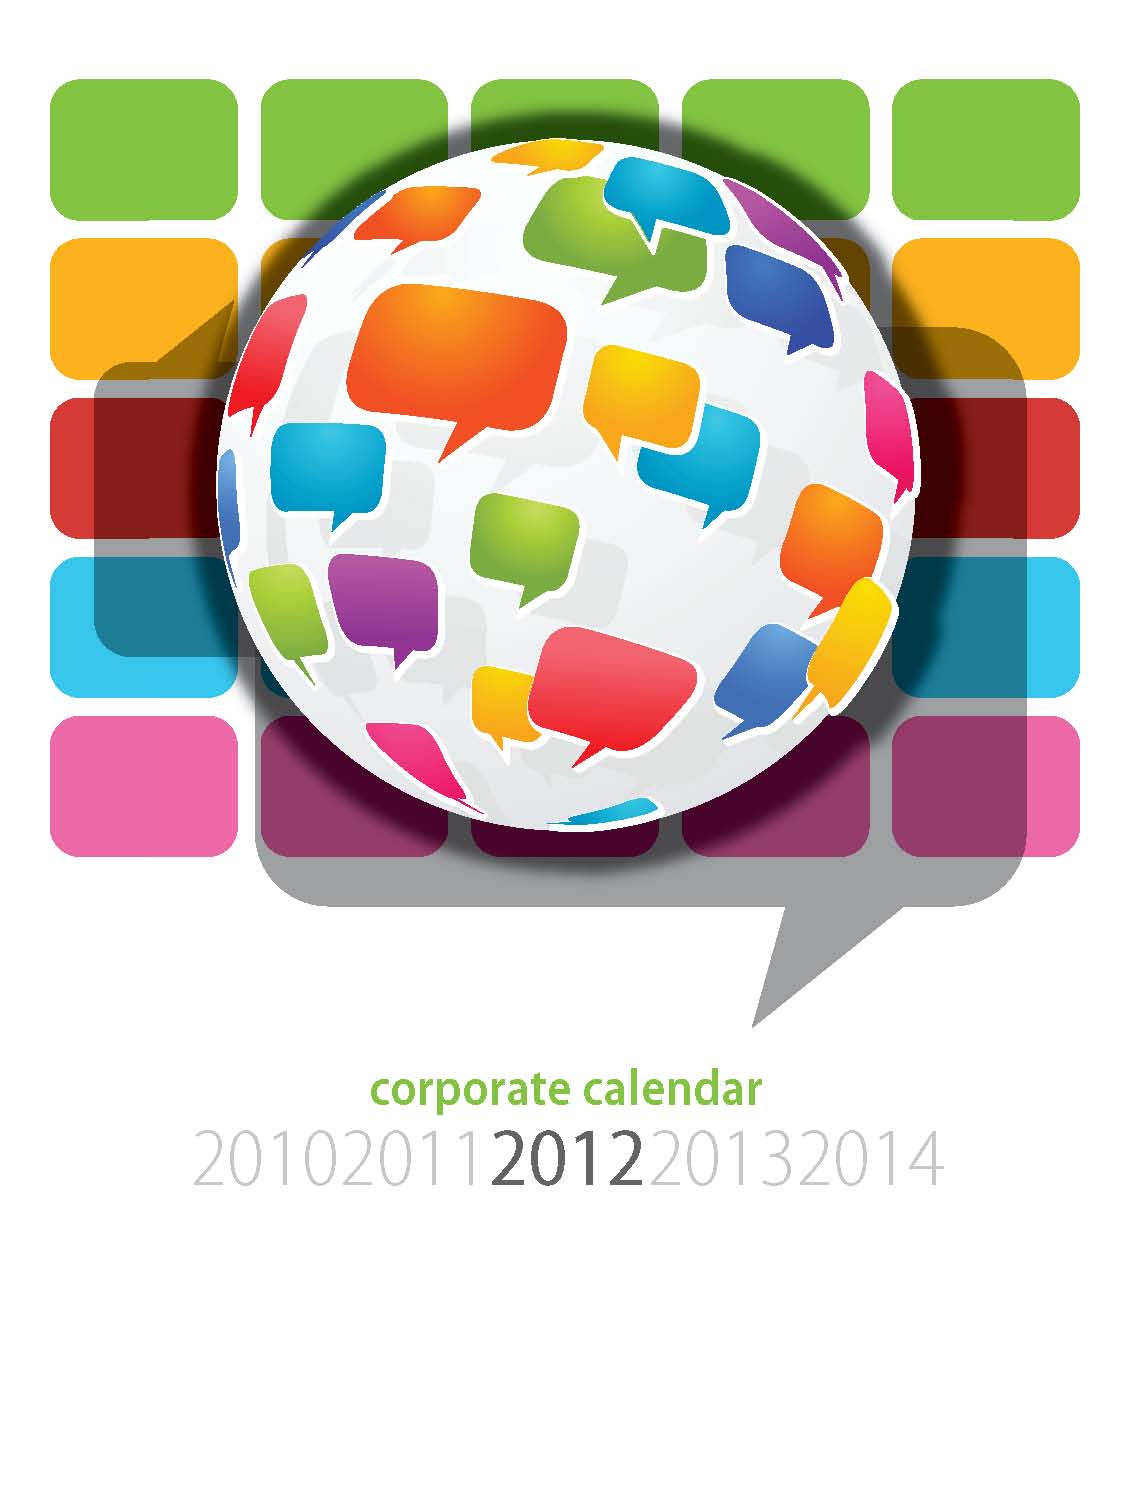 MSA 2012 Corporate Calendar